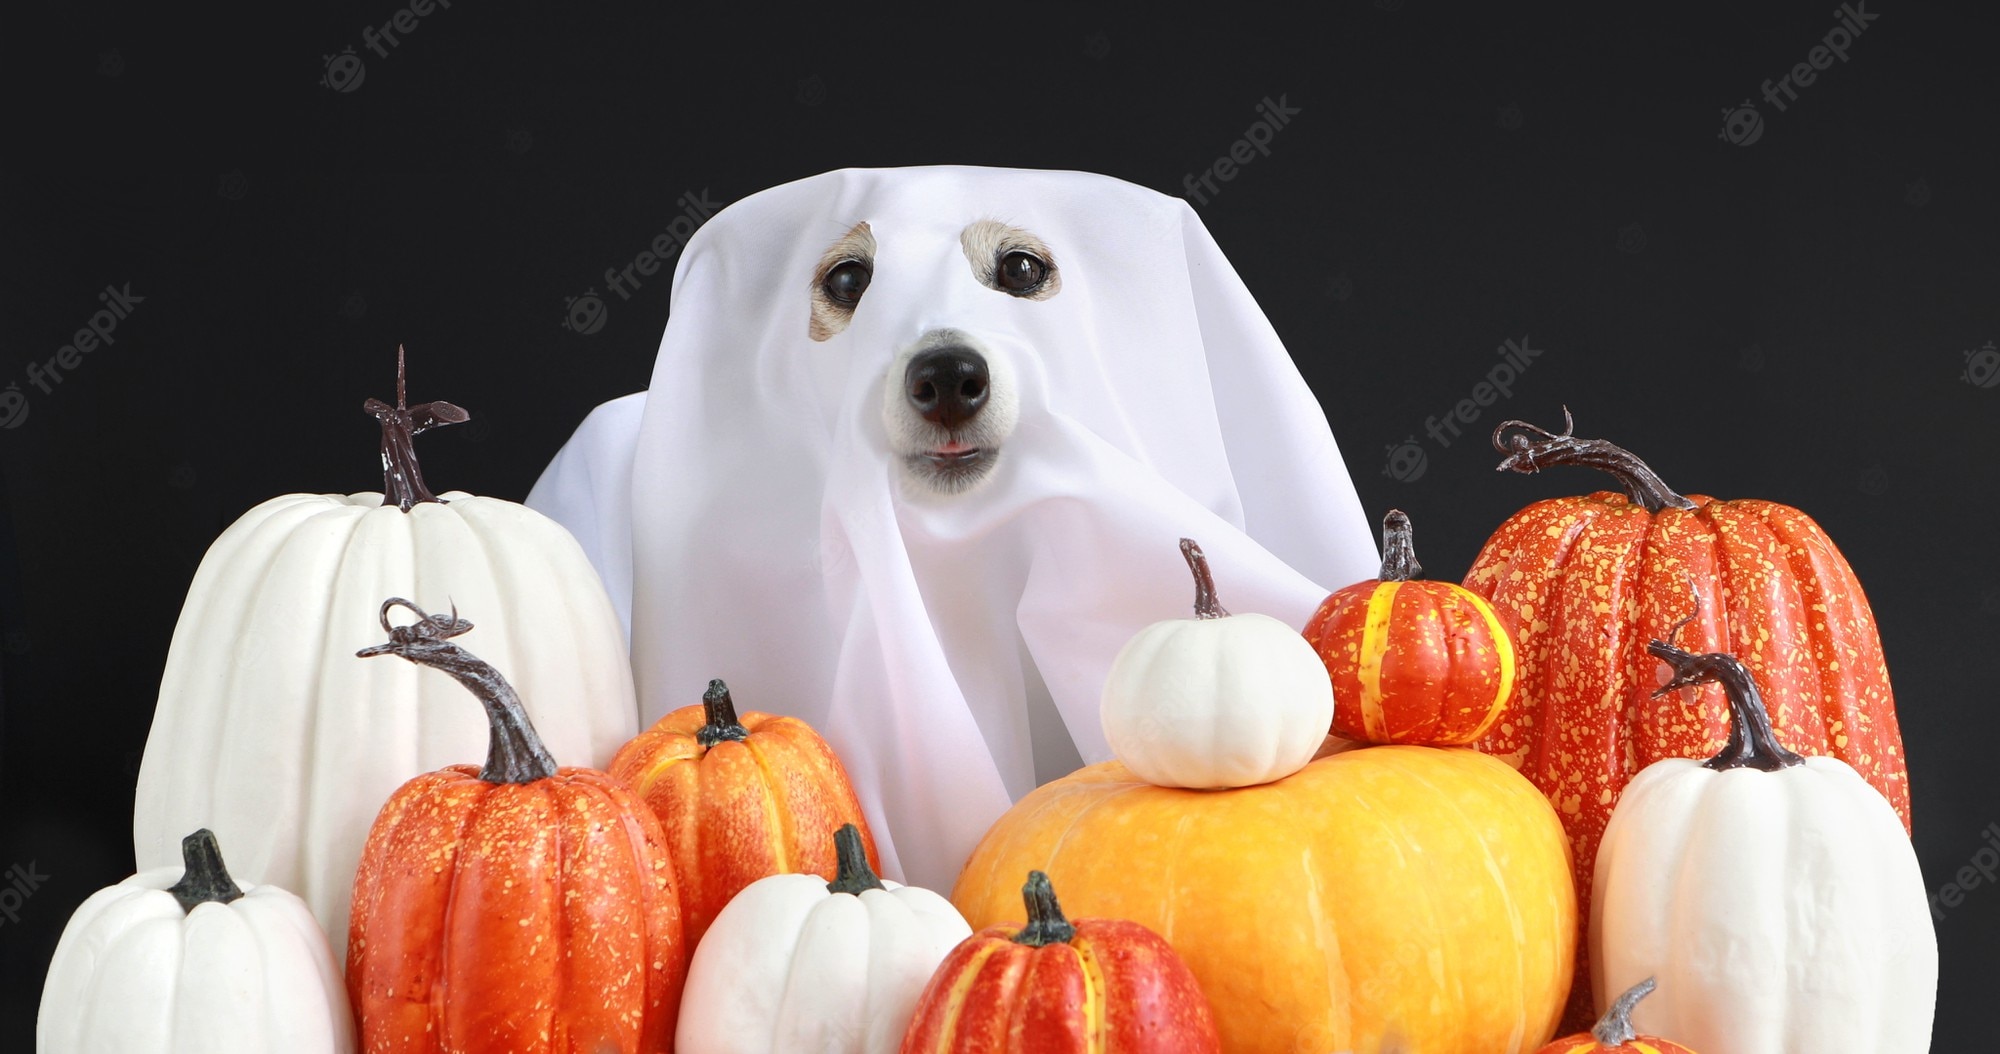 Dog Halloween Costume Image. Free Vectors, & PSD